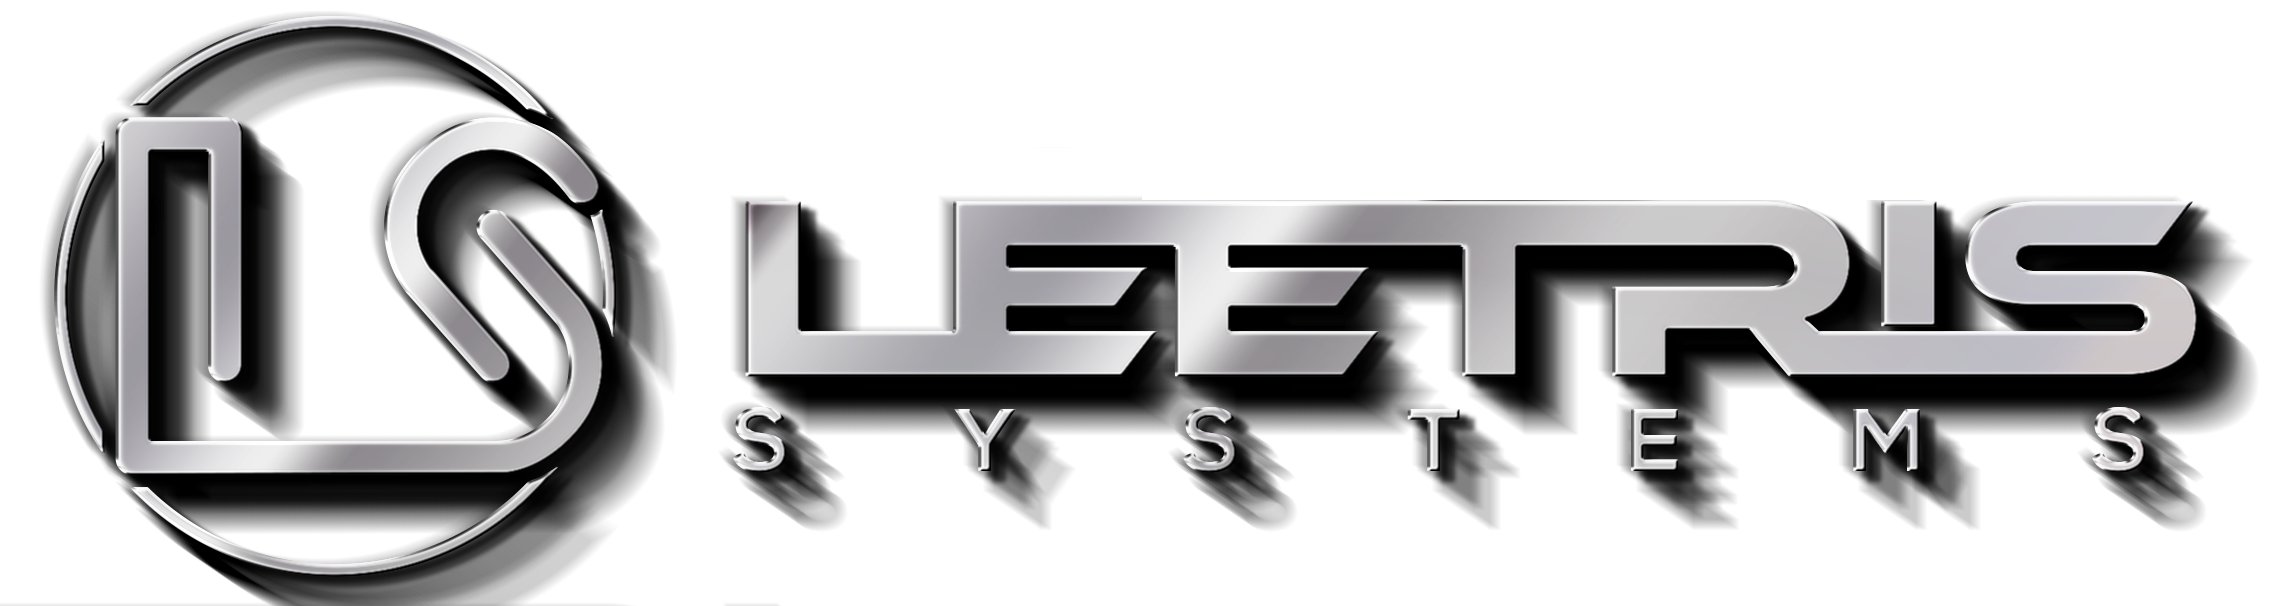 Leetris Systems